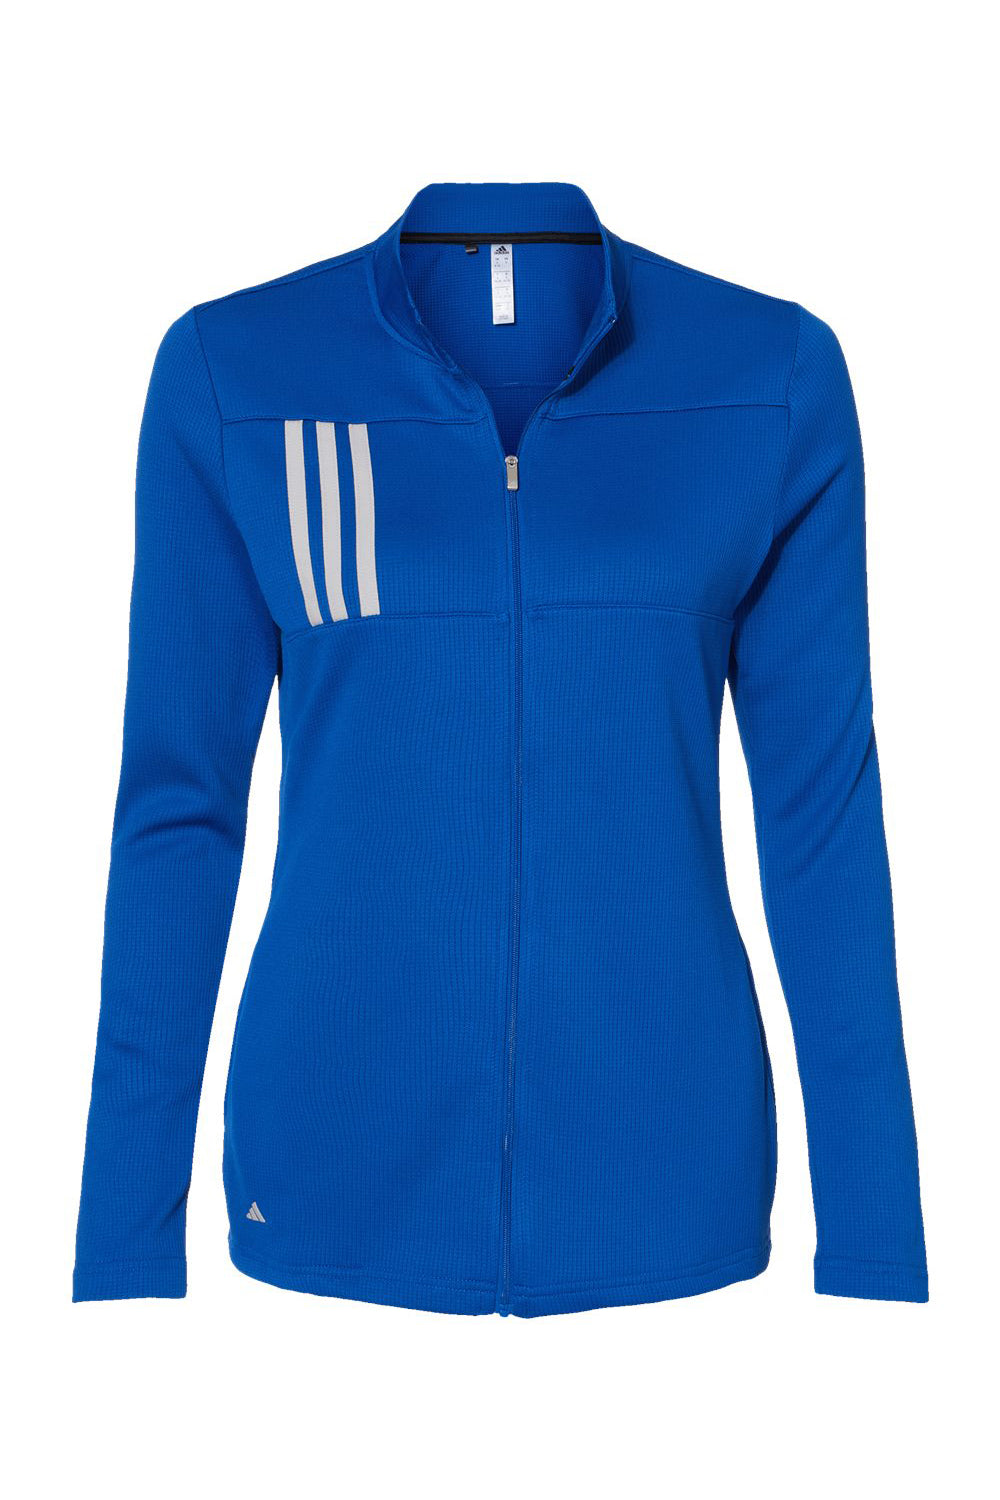 Adidas A483 Womens 3 Stripes Double Knit Moisture Wicking 1/4 Zip Sweatshirt Team Royal Blue/Grey Flat Front